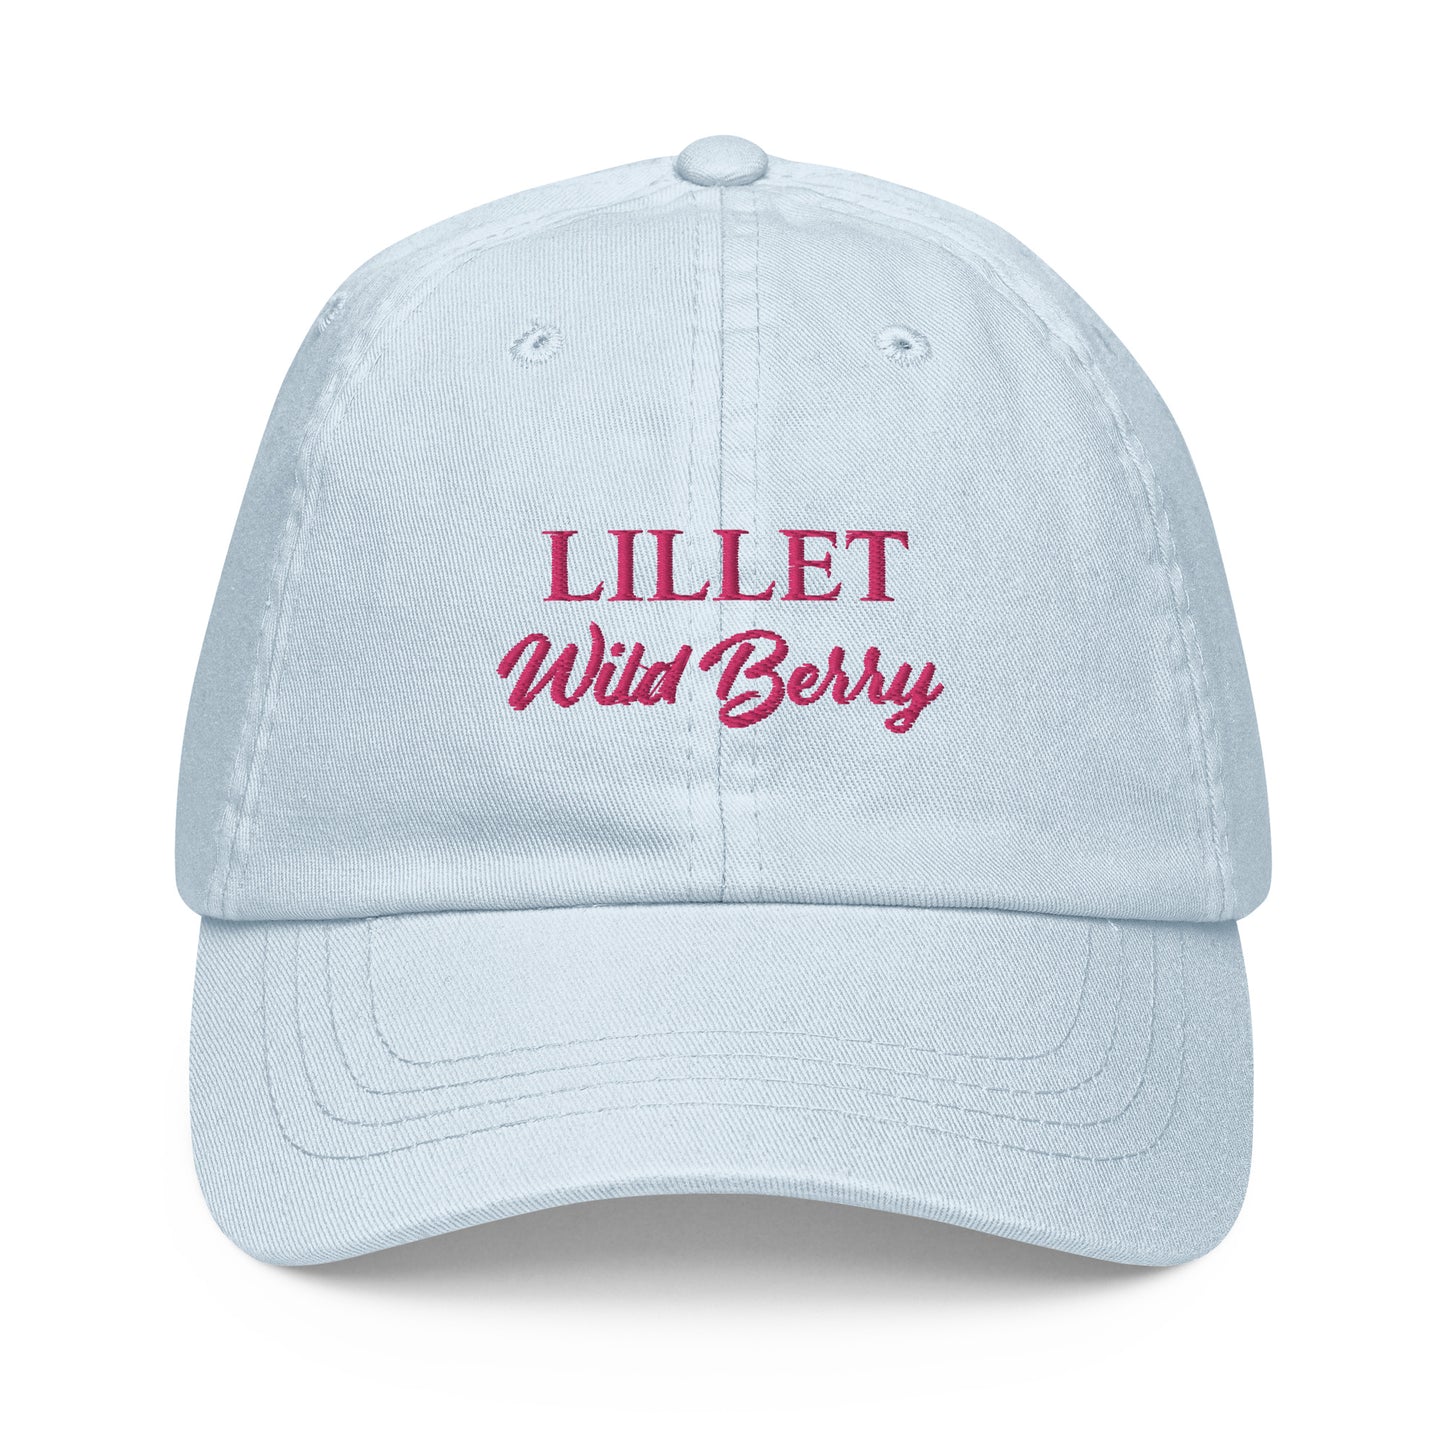 LILLET WILD BERRY Cap